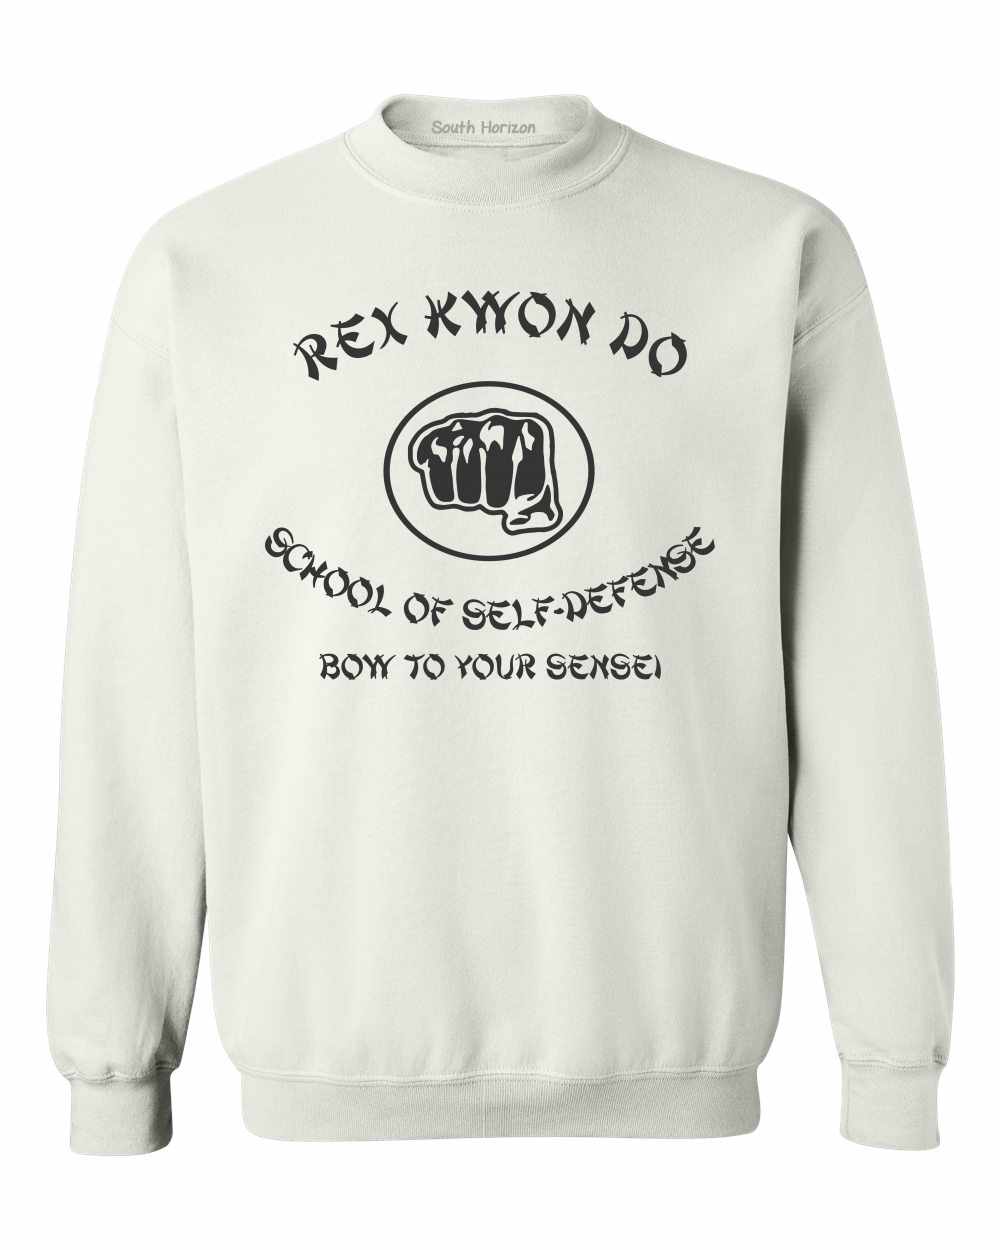 REX KWON DO SCHOOL OF SELF DEFENSE on SweatShirt (#386-11)